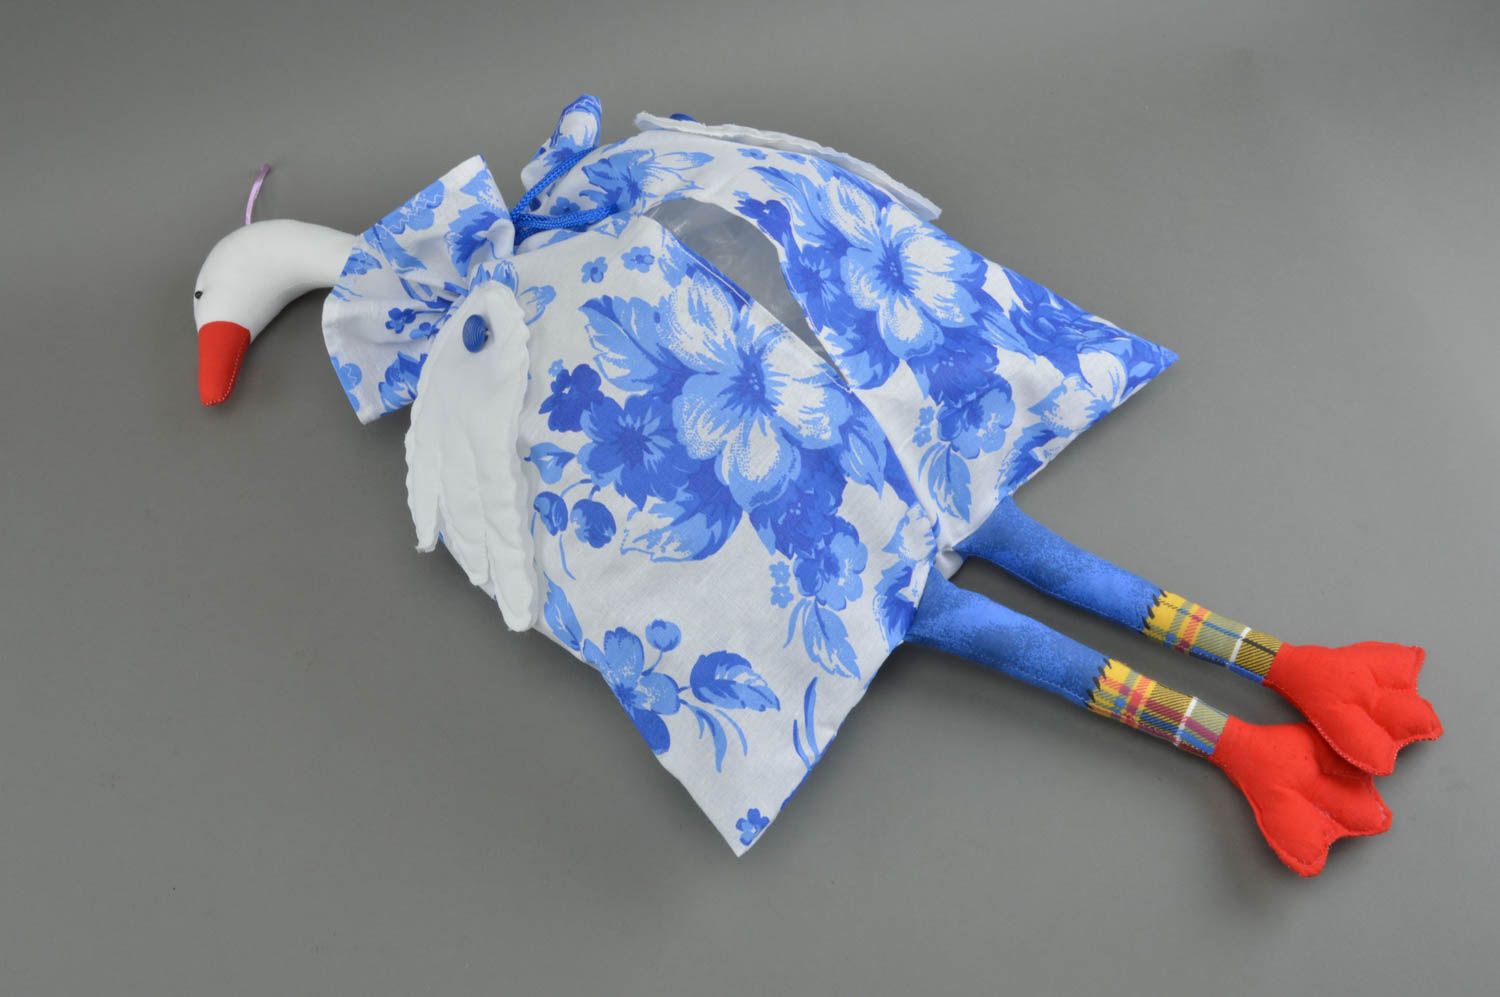 Handmade textile toy for plastic bags storage kitchen decor ideas gift ideas photo 2